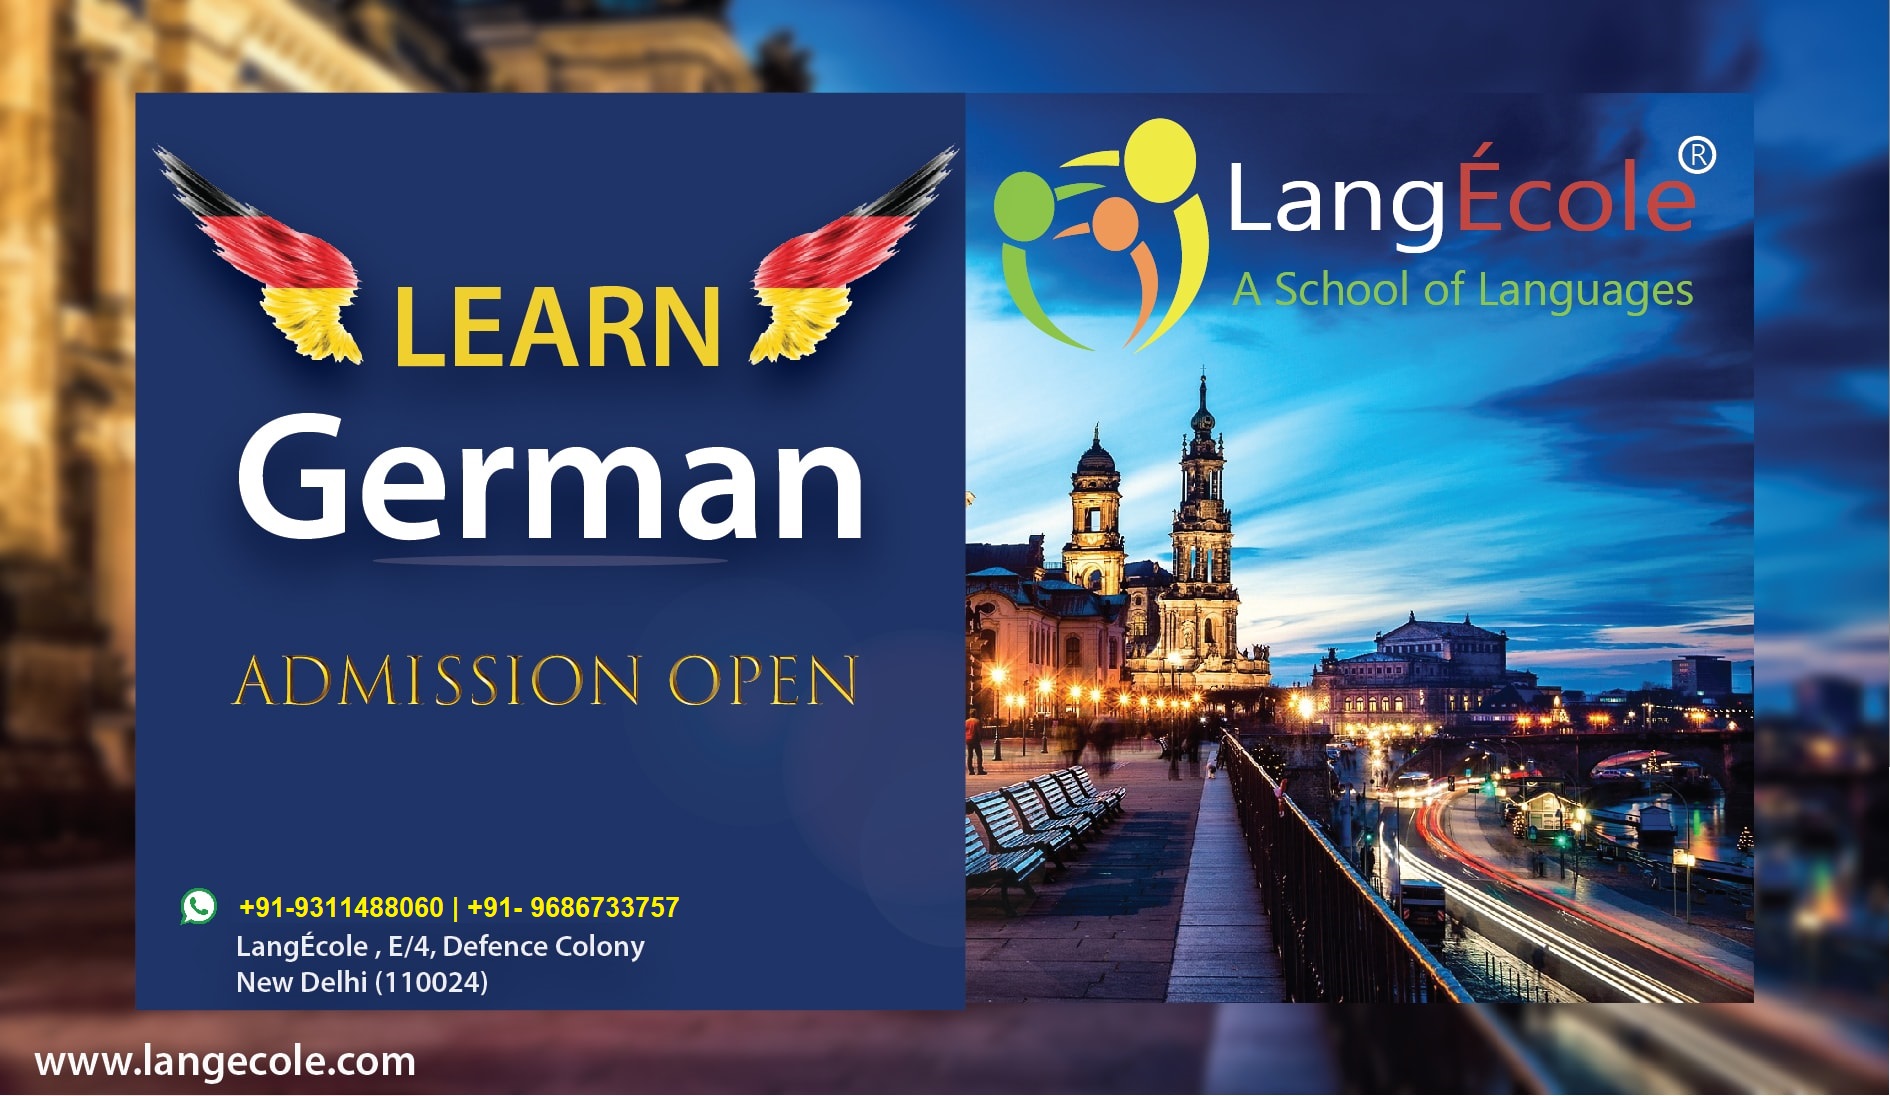 Learn german language, language institute in delhi, bangalore, langecole